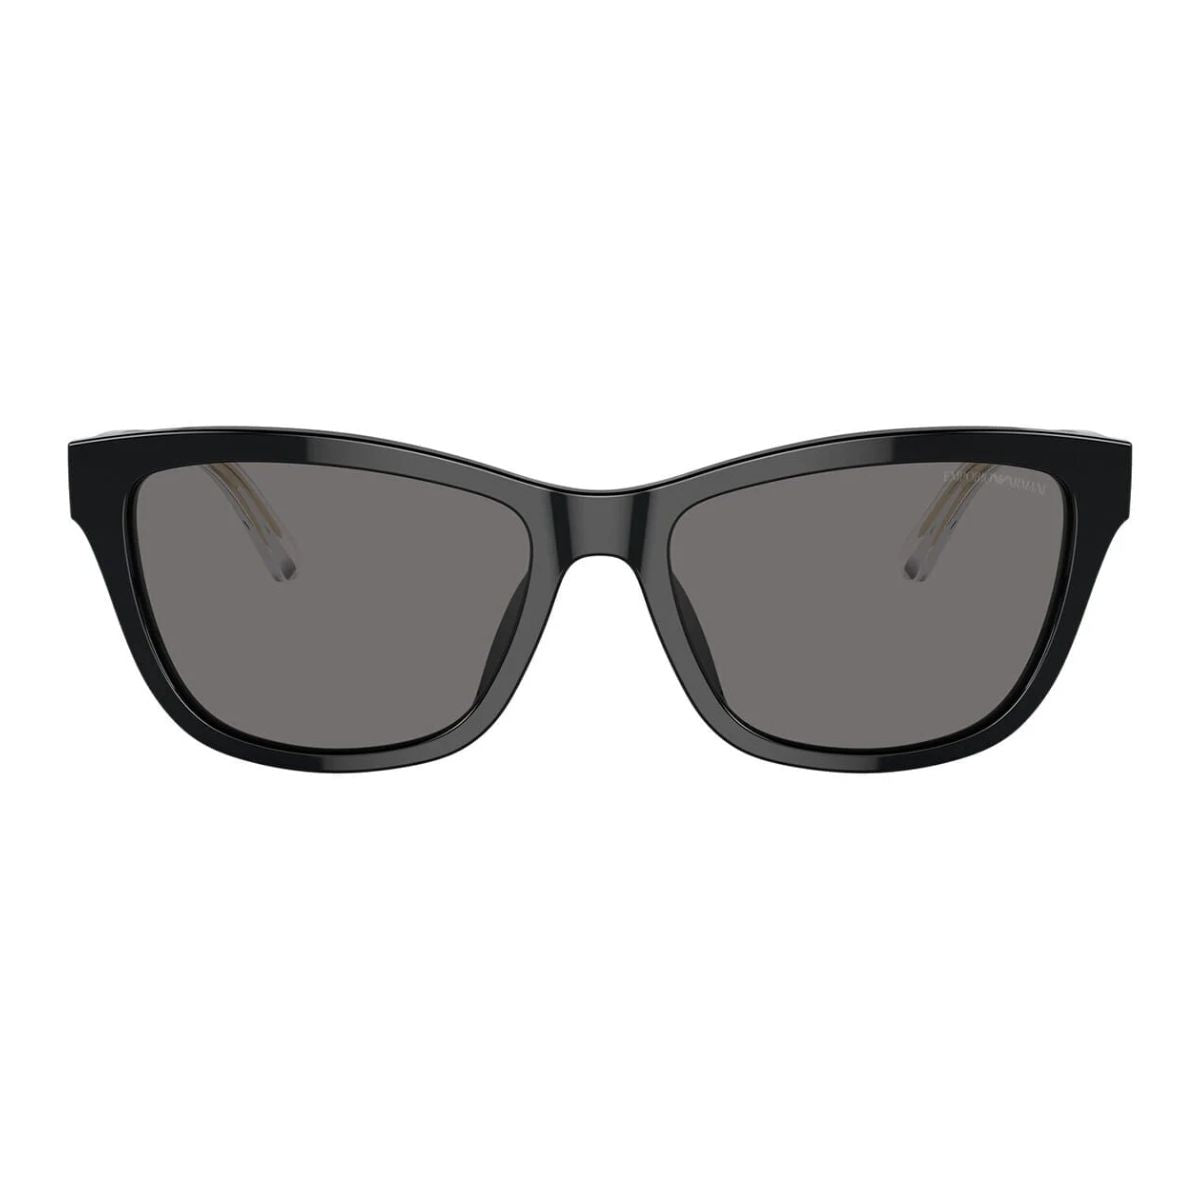 "Shop Stylish Emporio Armani Polarized Sunglasses For Women's | Optorium"